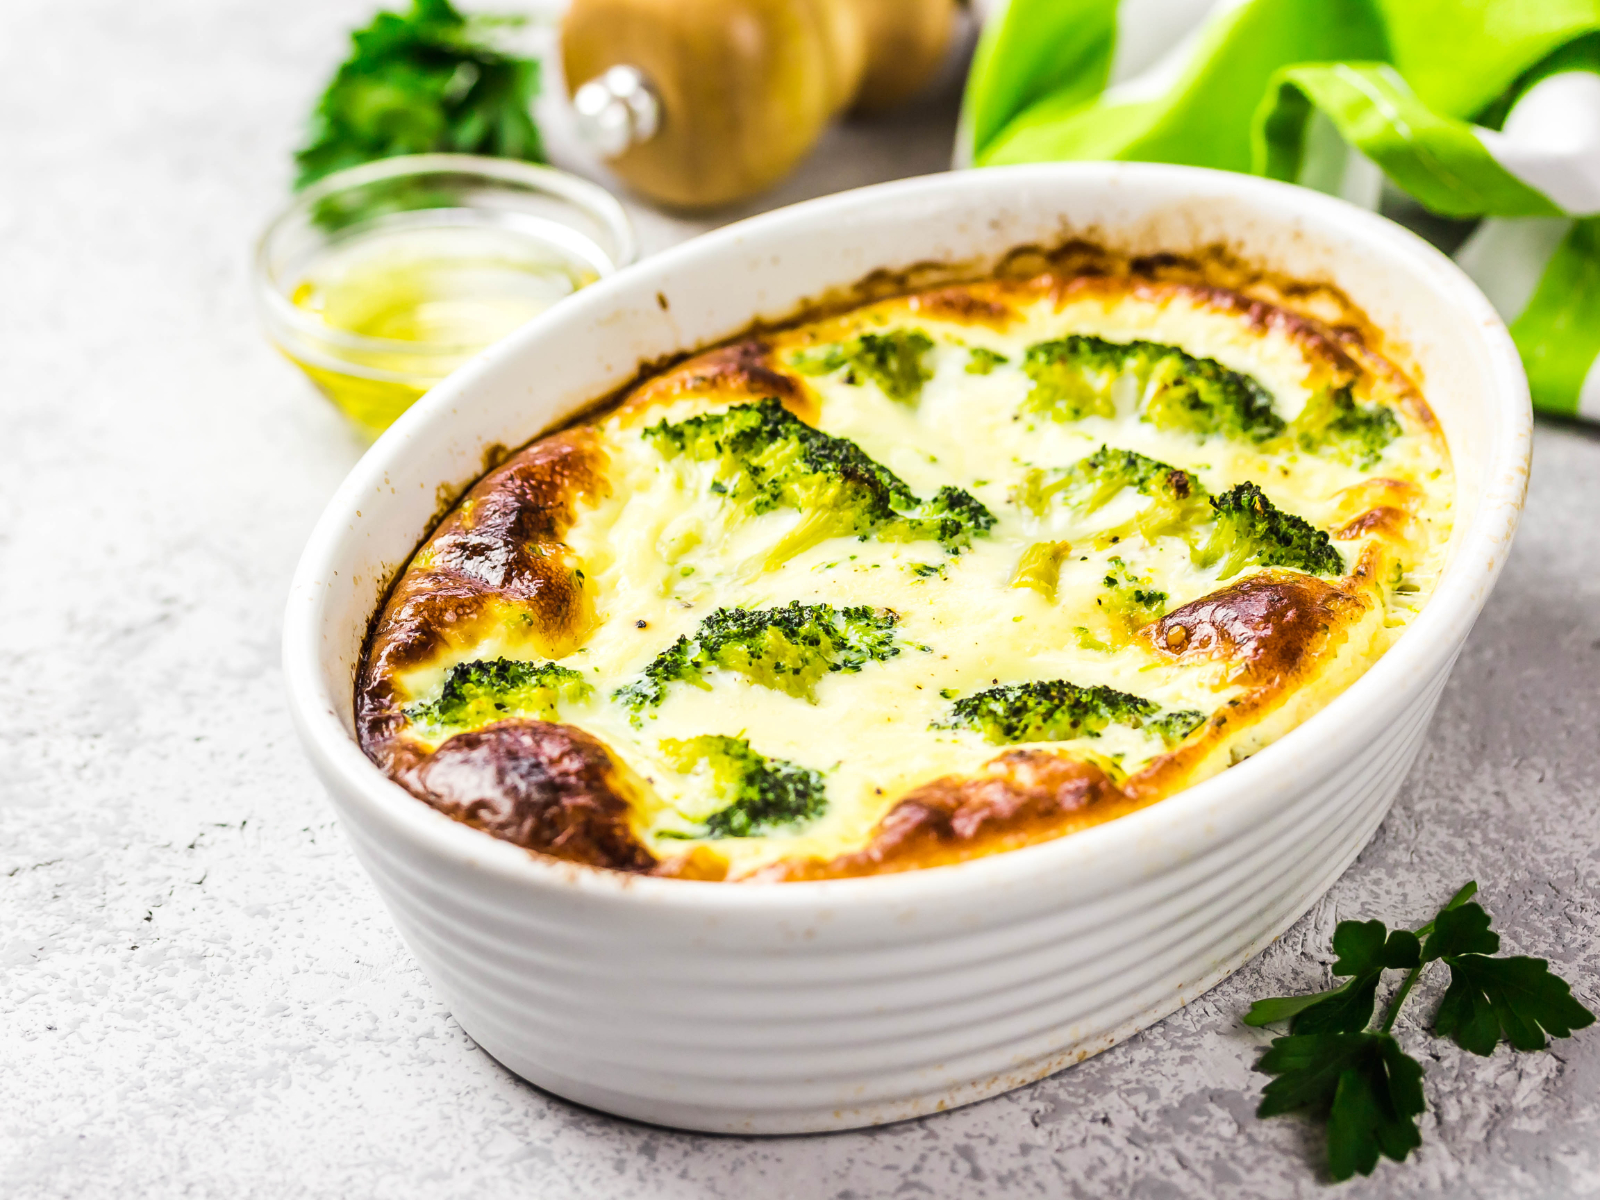 egg casserole with broccoli